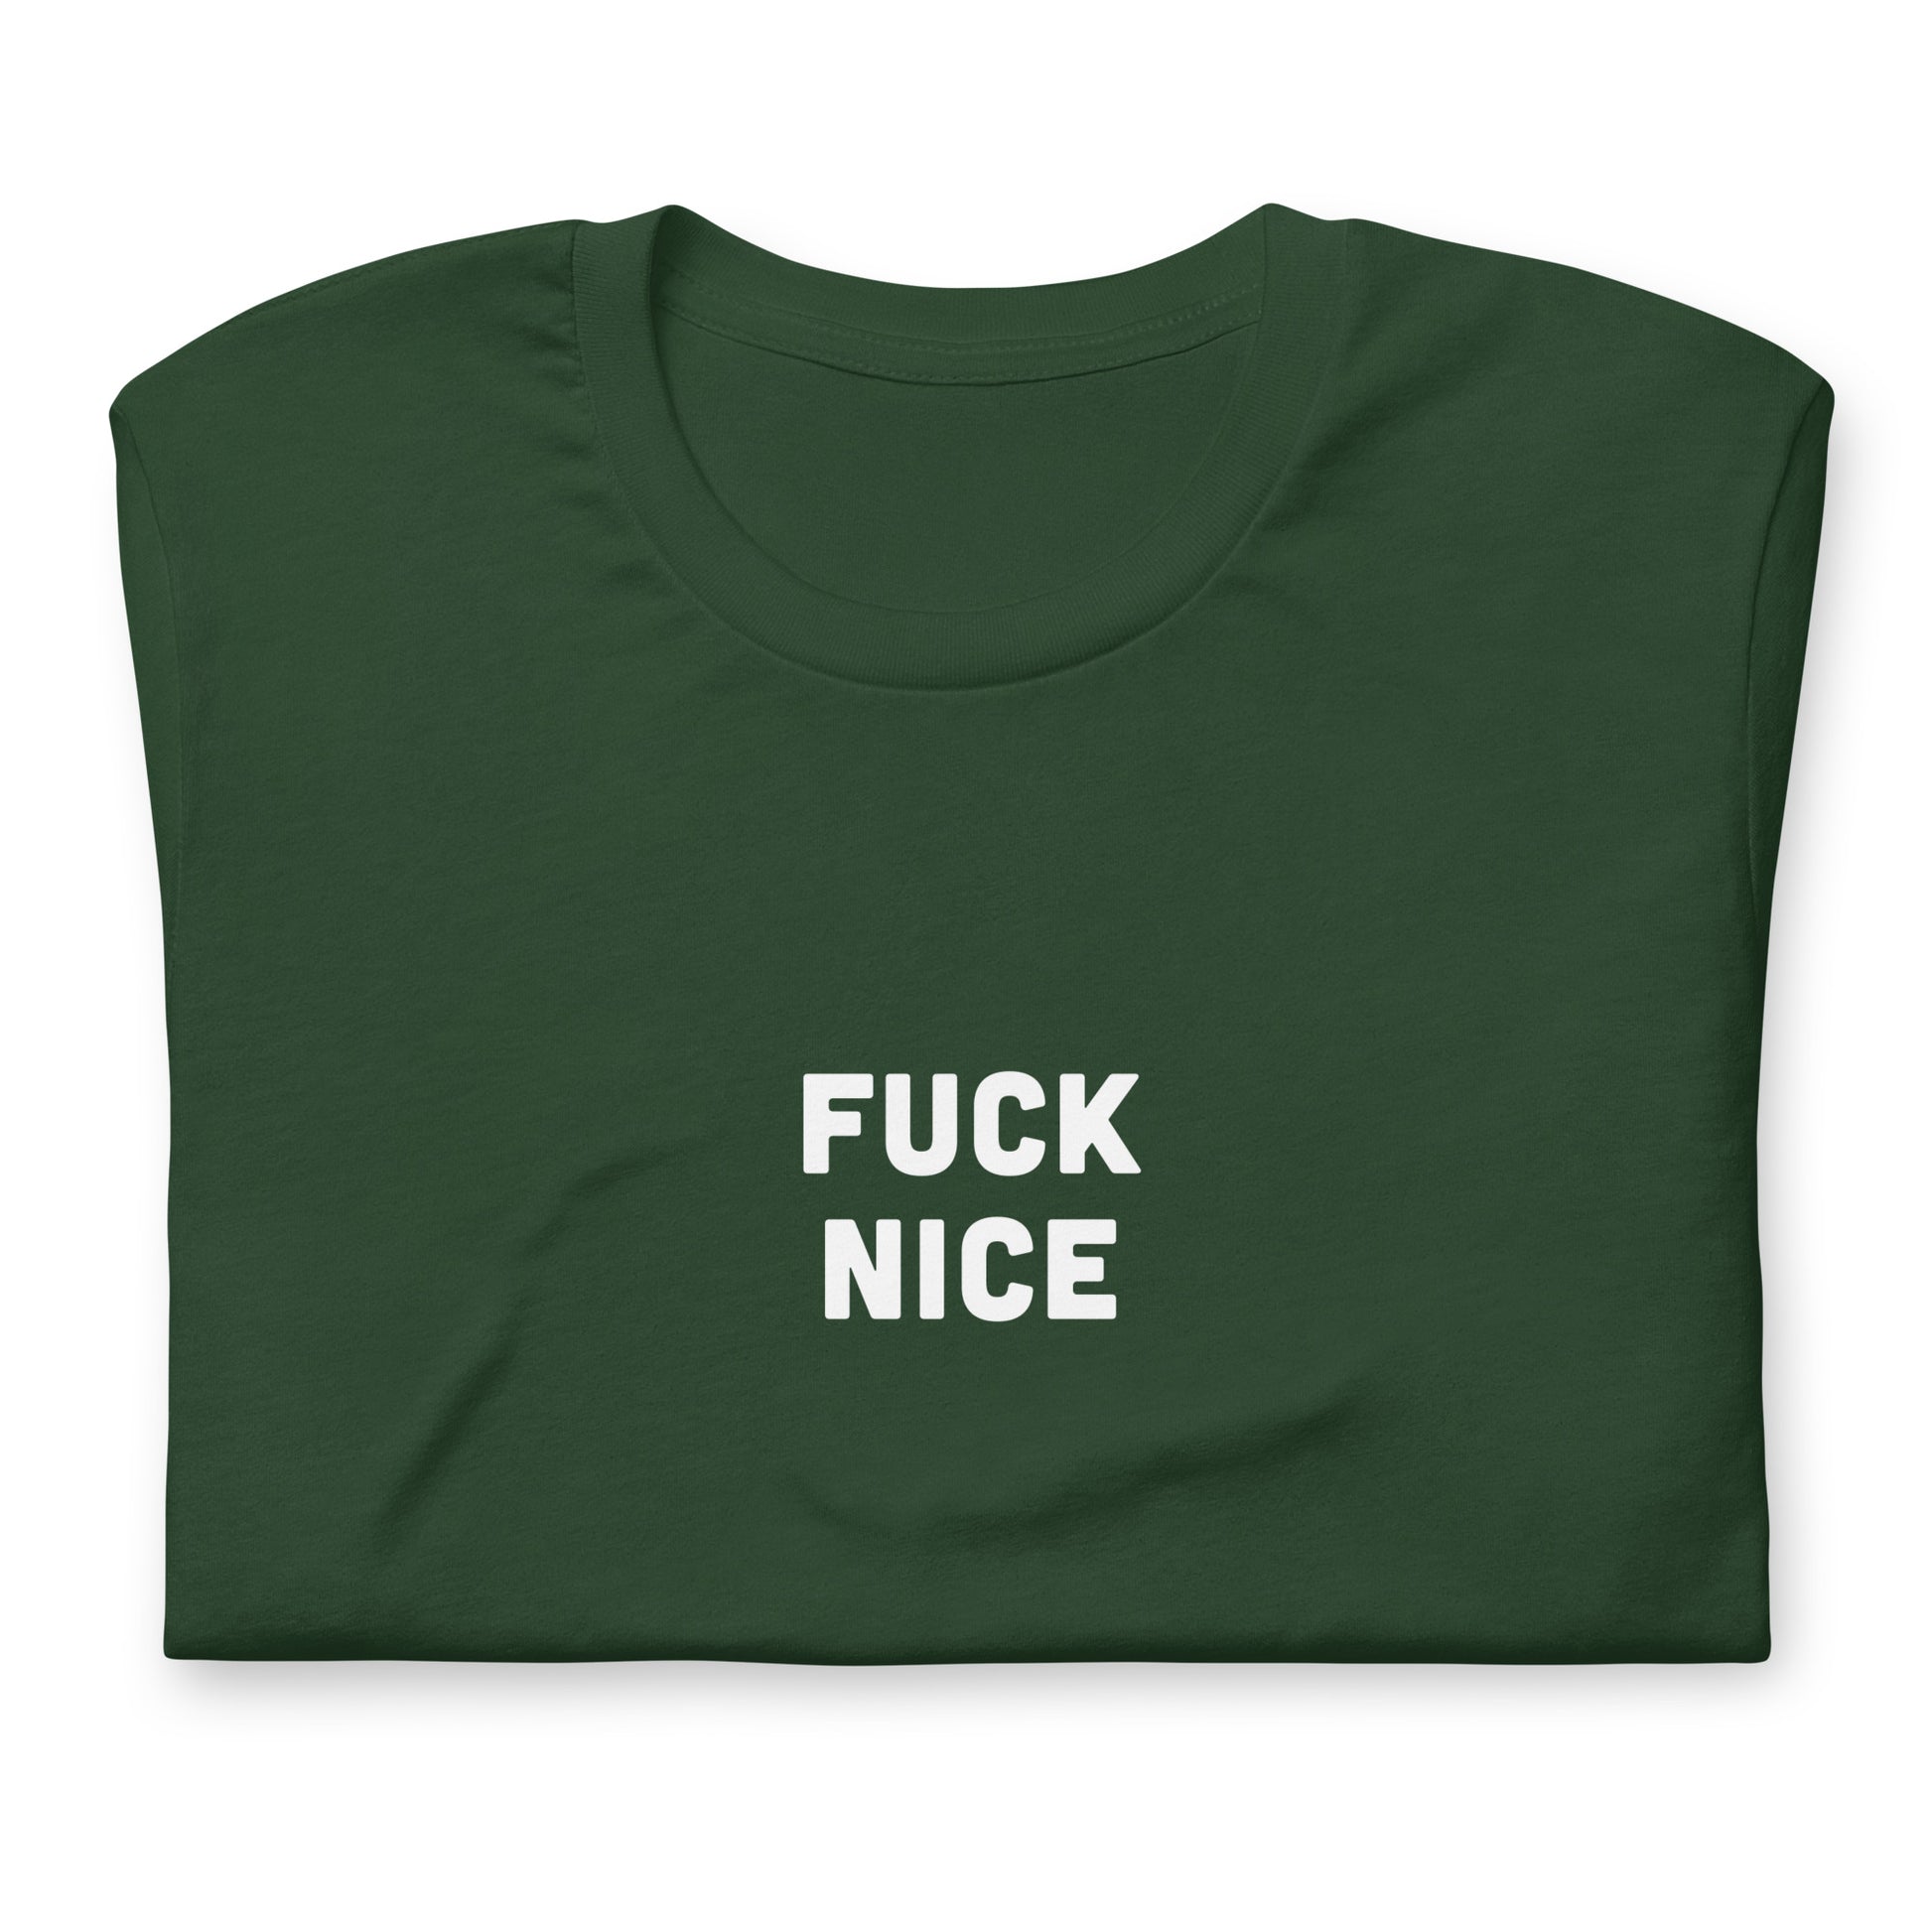 Fuck Nice T-Shirt Size XL Color Black